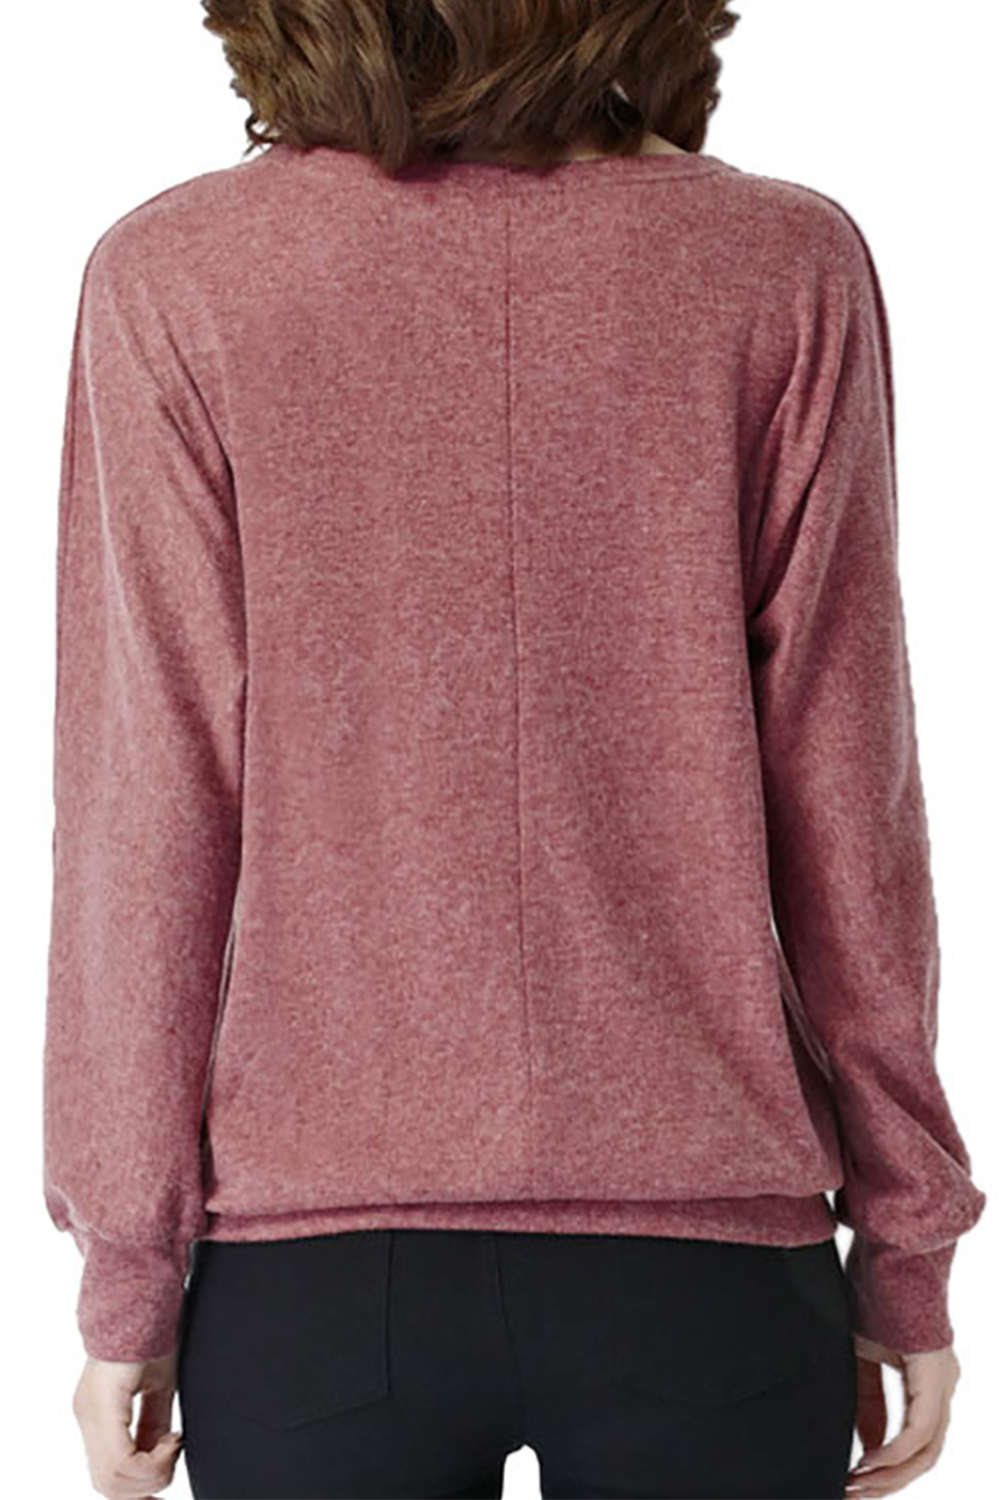 Iyasson Women's Casual Pullover Baggy Sweatshirt